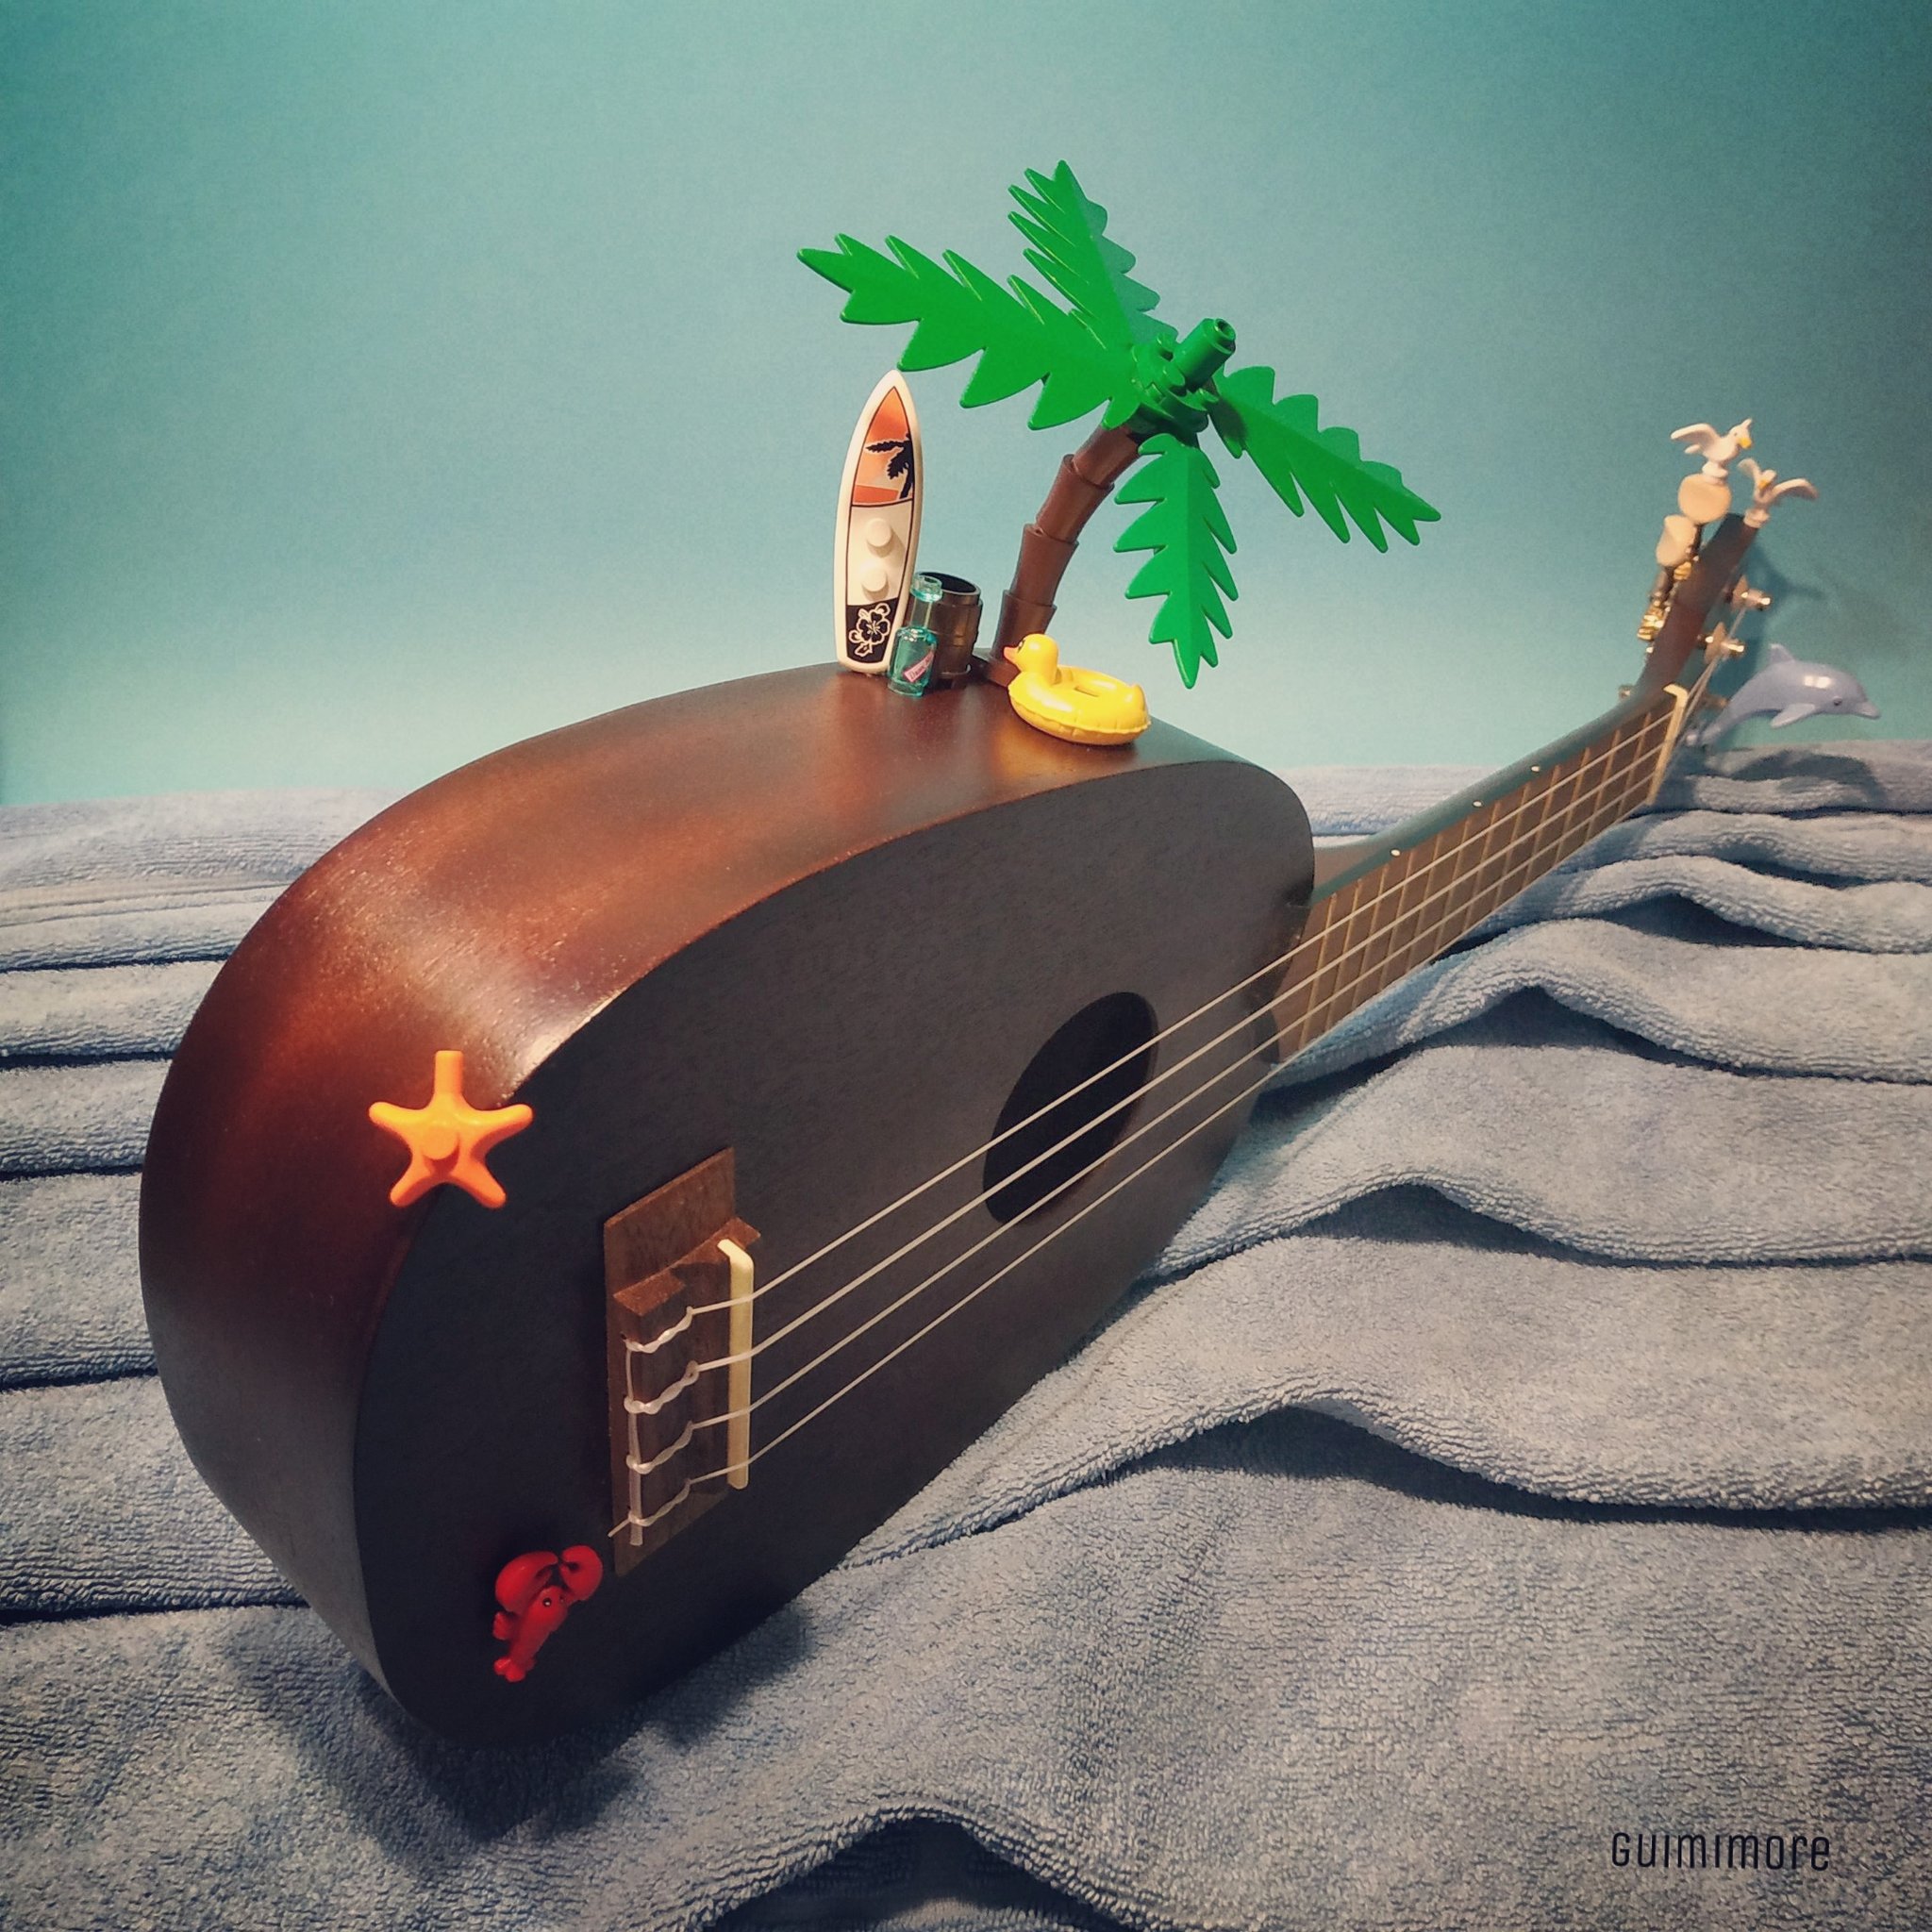 guimimore on Twitter: ""My tiny #ukulele #aloha #surf #hawaii #island #paradise #goodlife #summer #LEGO #afol #legography #minifigures https://t.co/XmZxrYhURN" Twitter